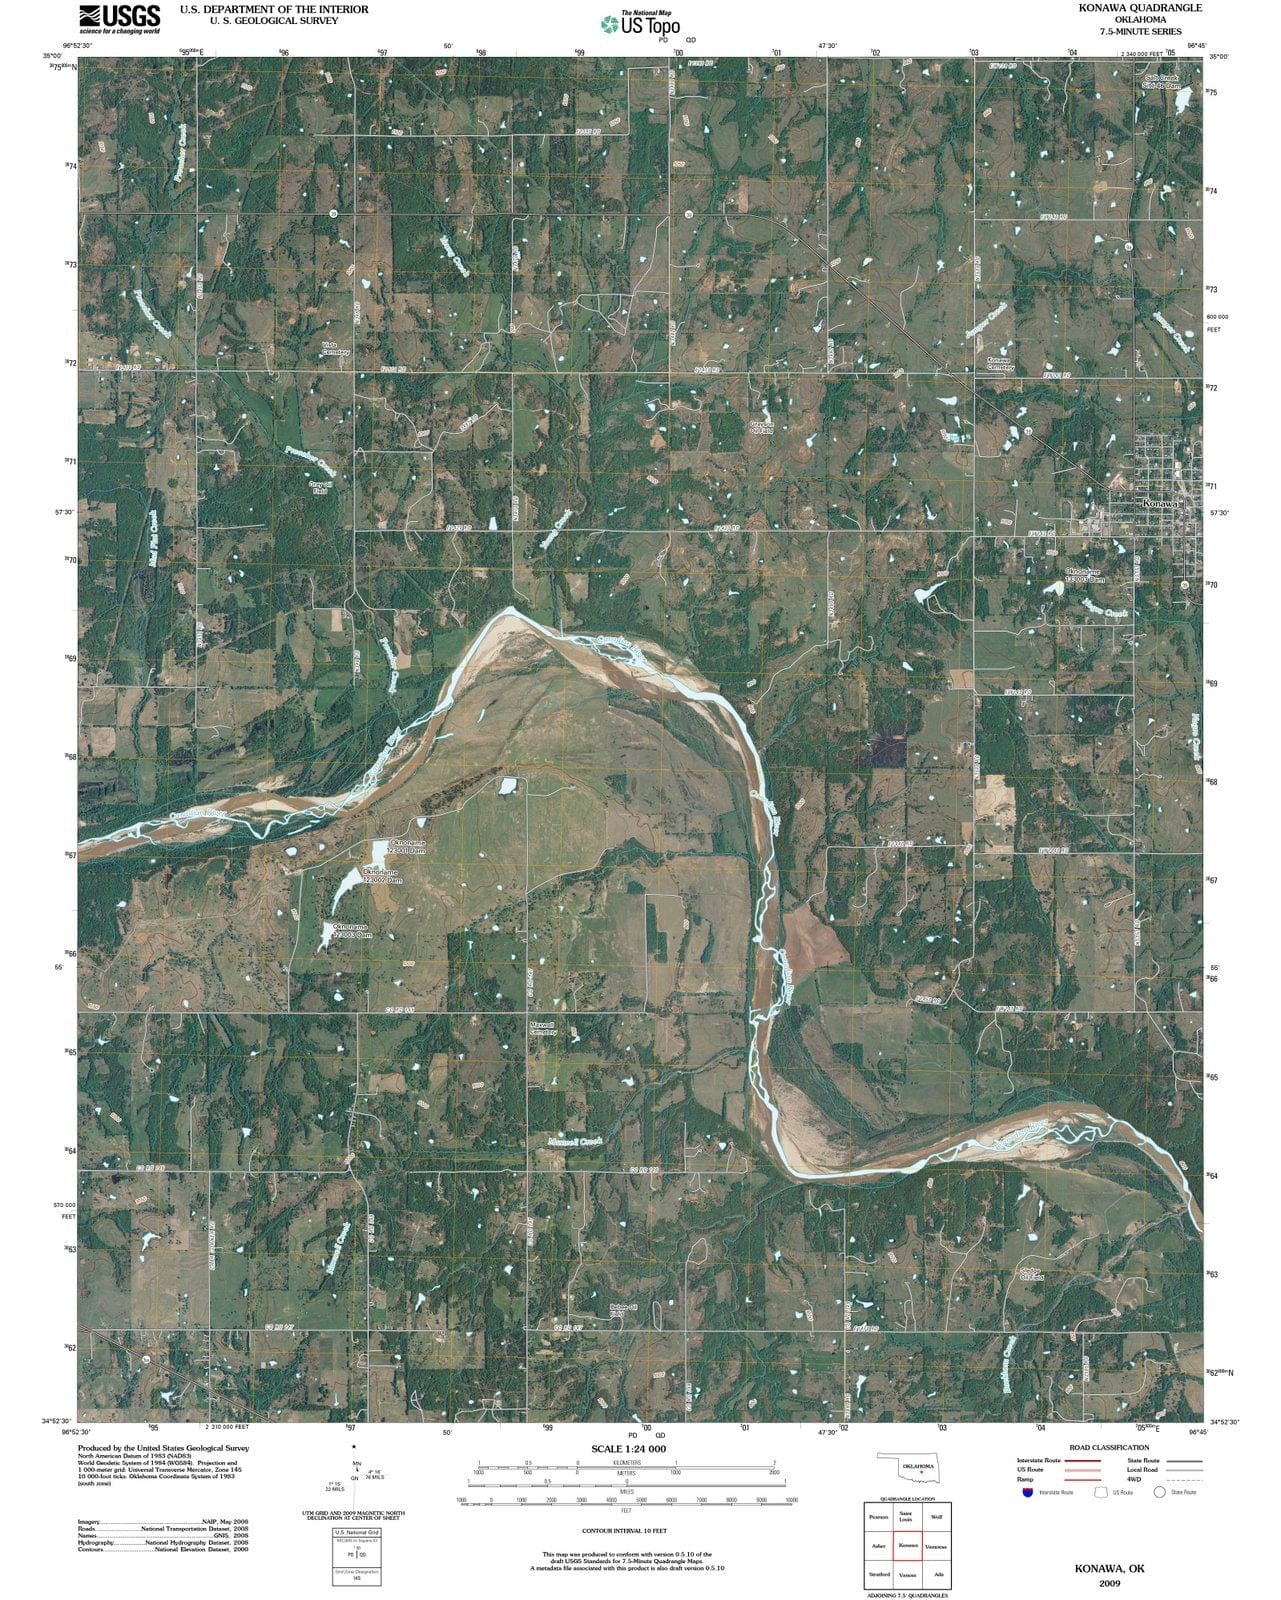 2009 Konawa, OK - Oklahoma - USGS Topographic Map